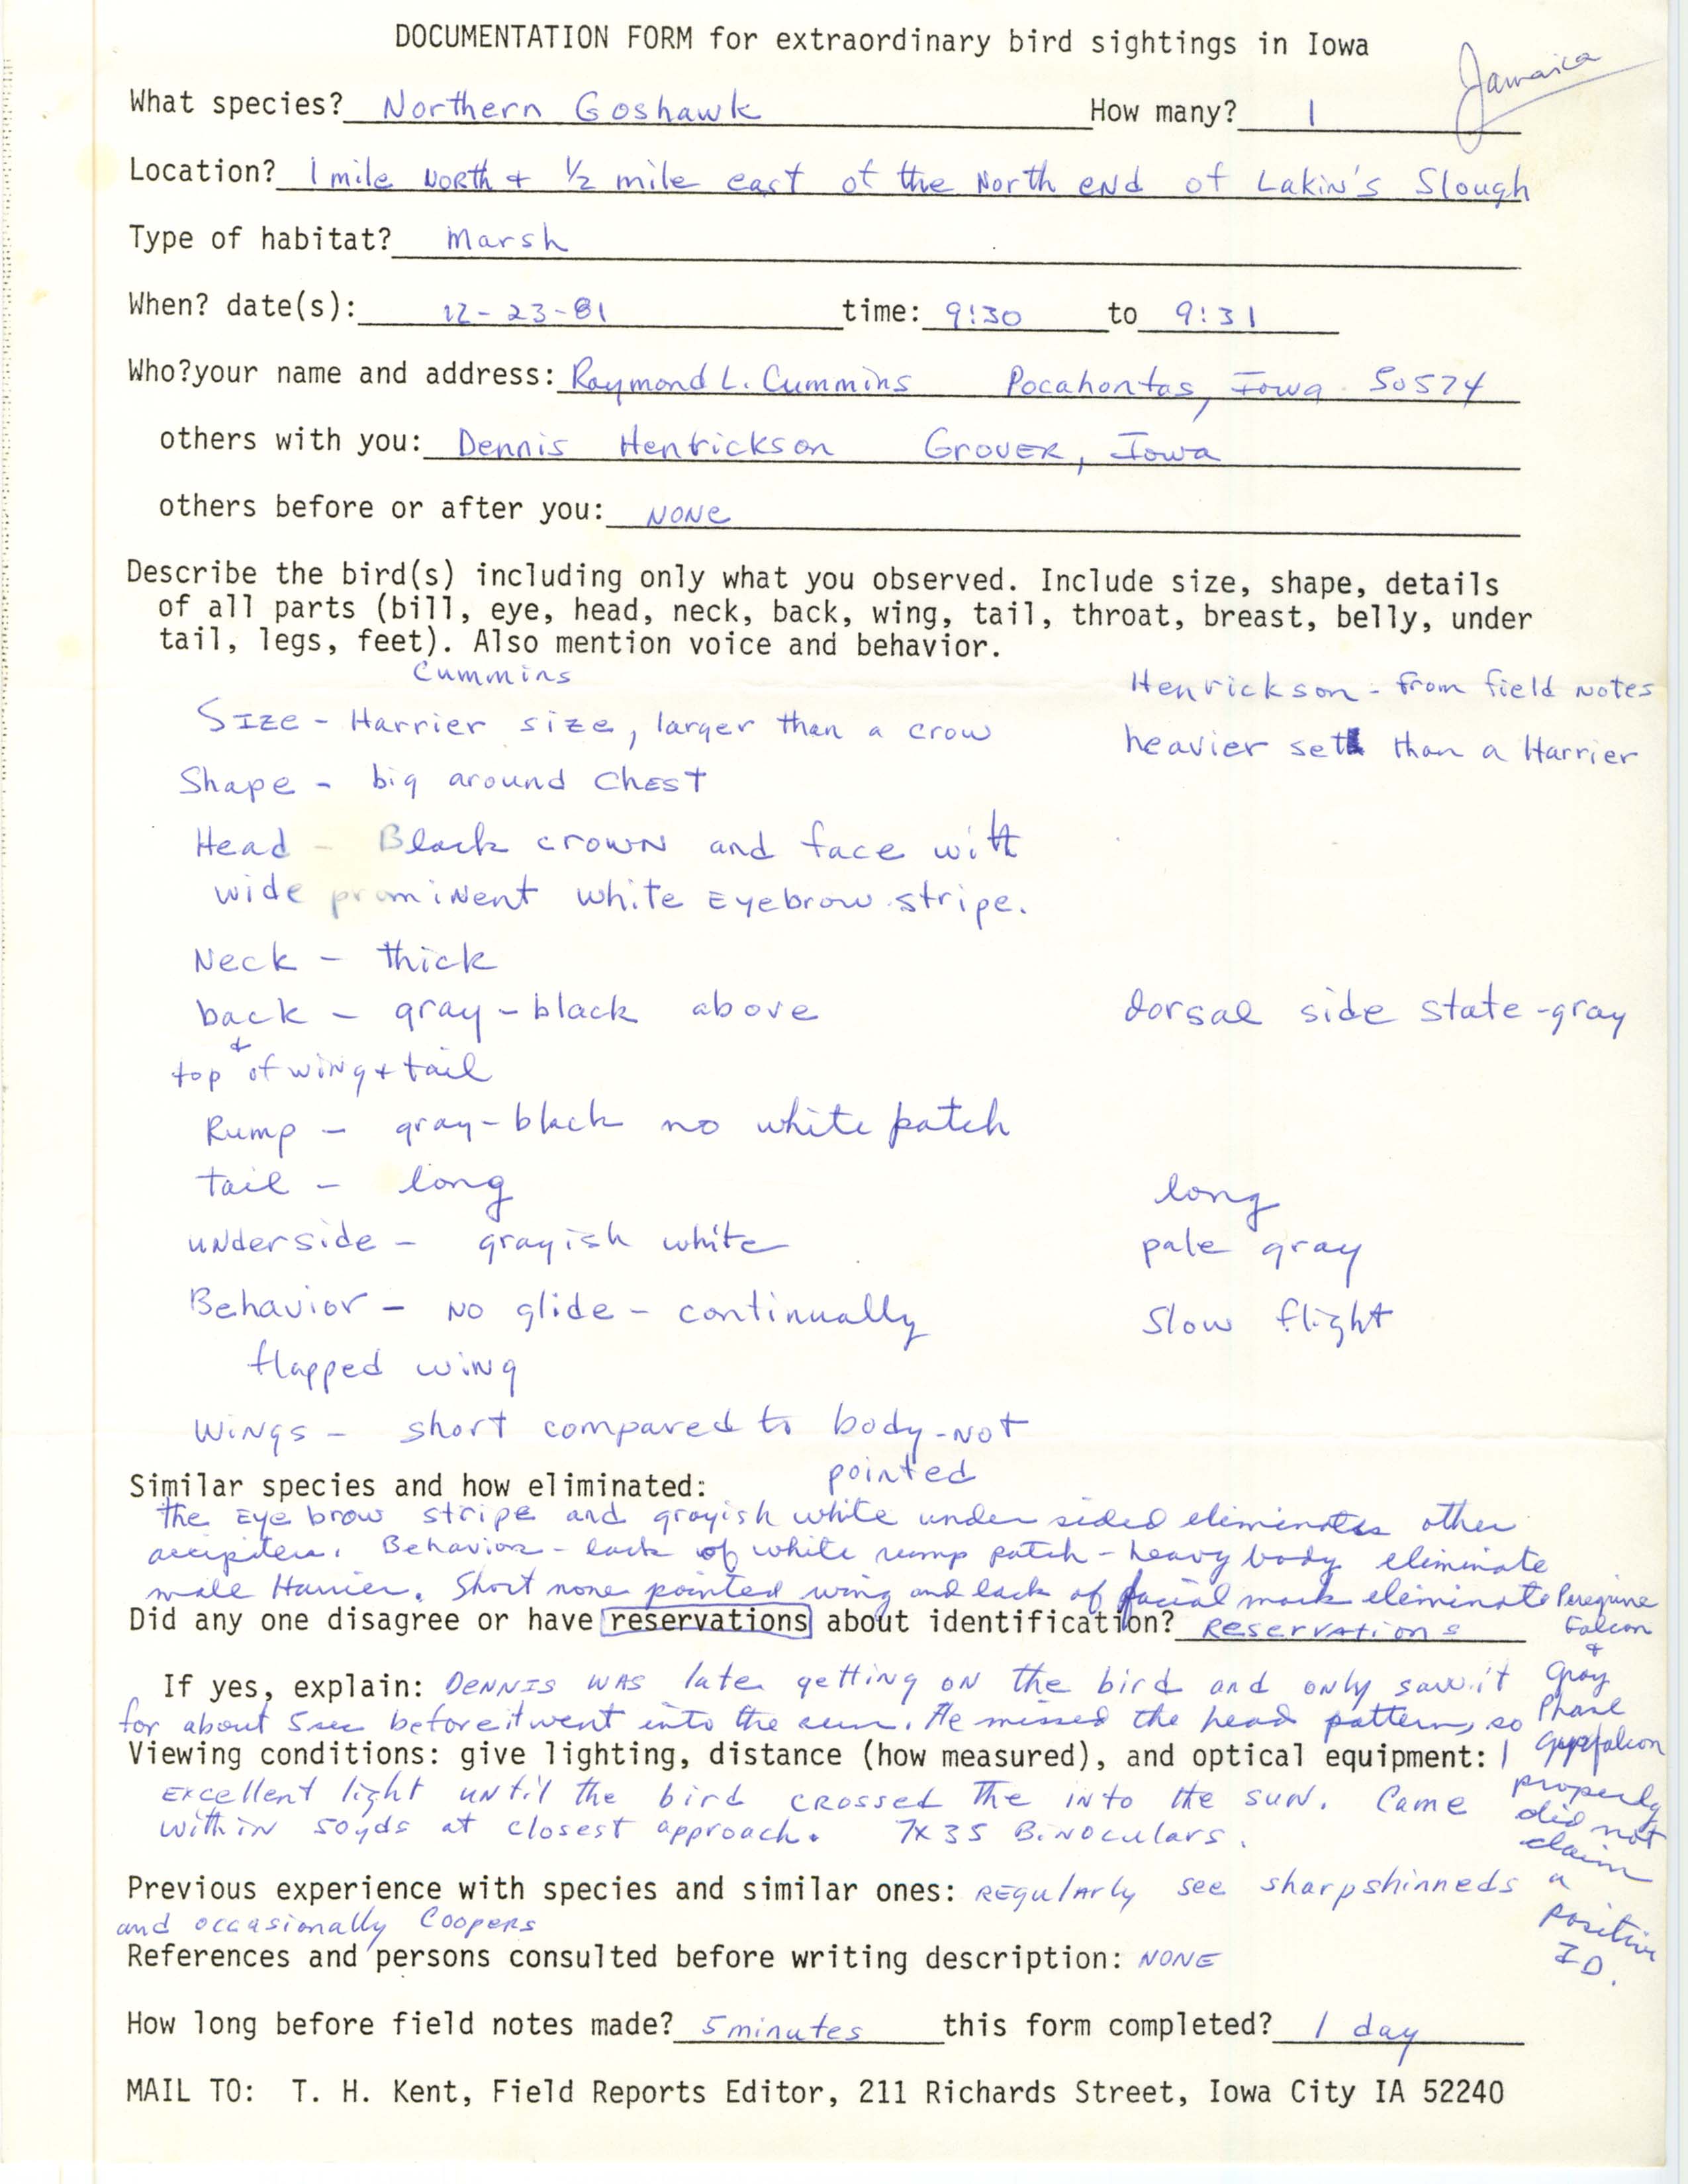 Rare bird documentation form for Northern Goshawk at Lakin's Slough, 1981